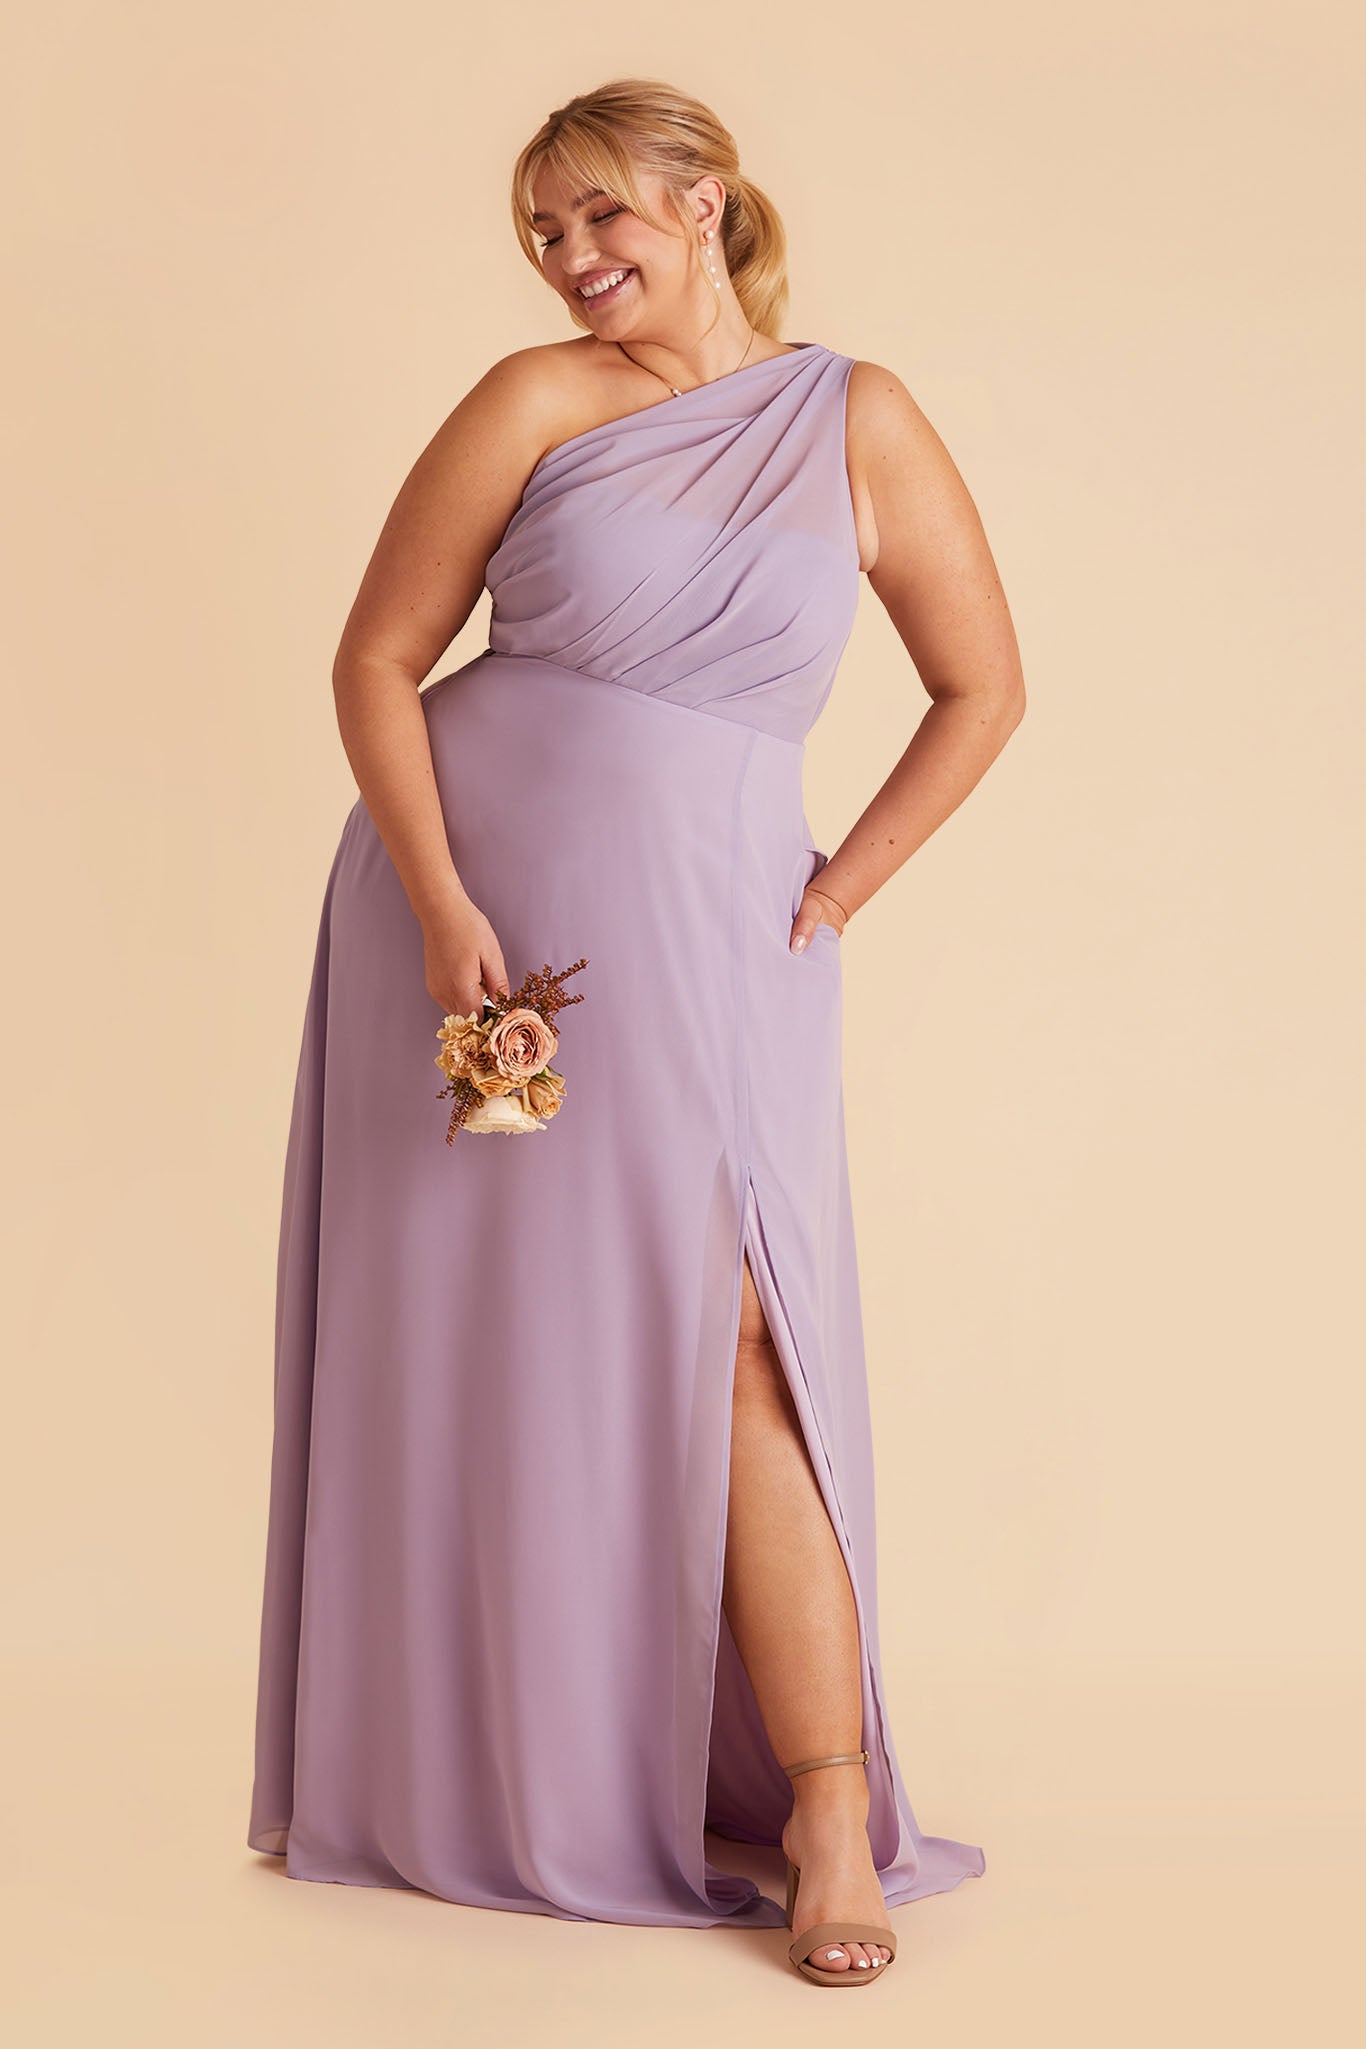 Kira Dress - Lavender